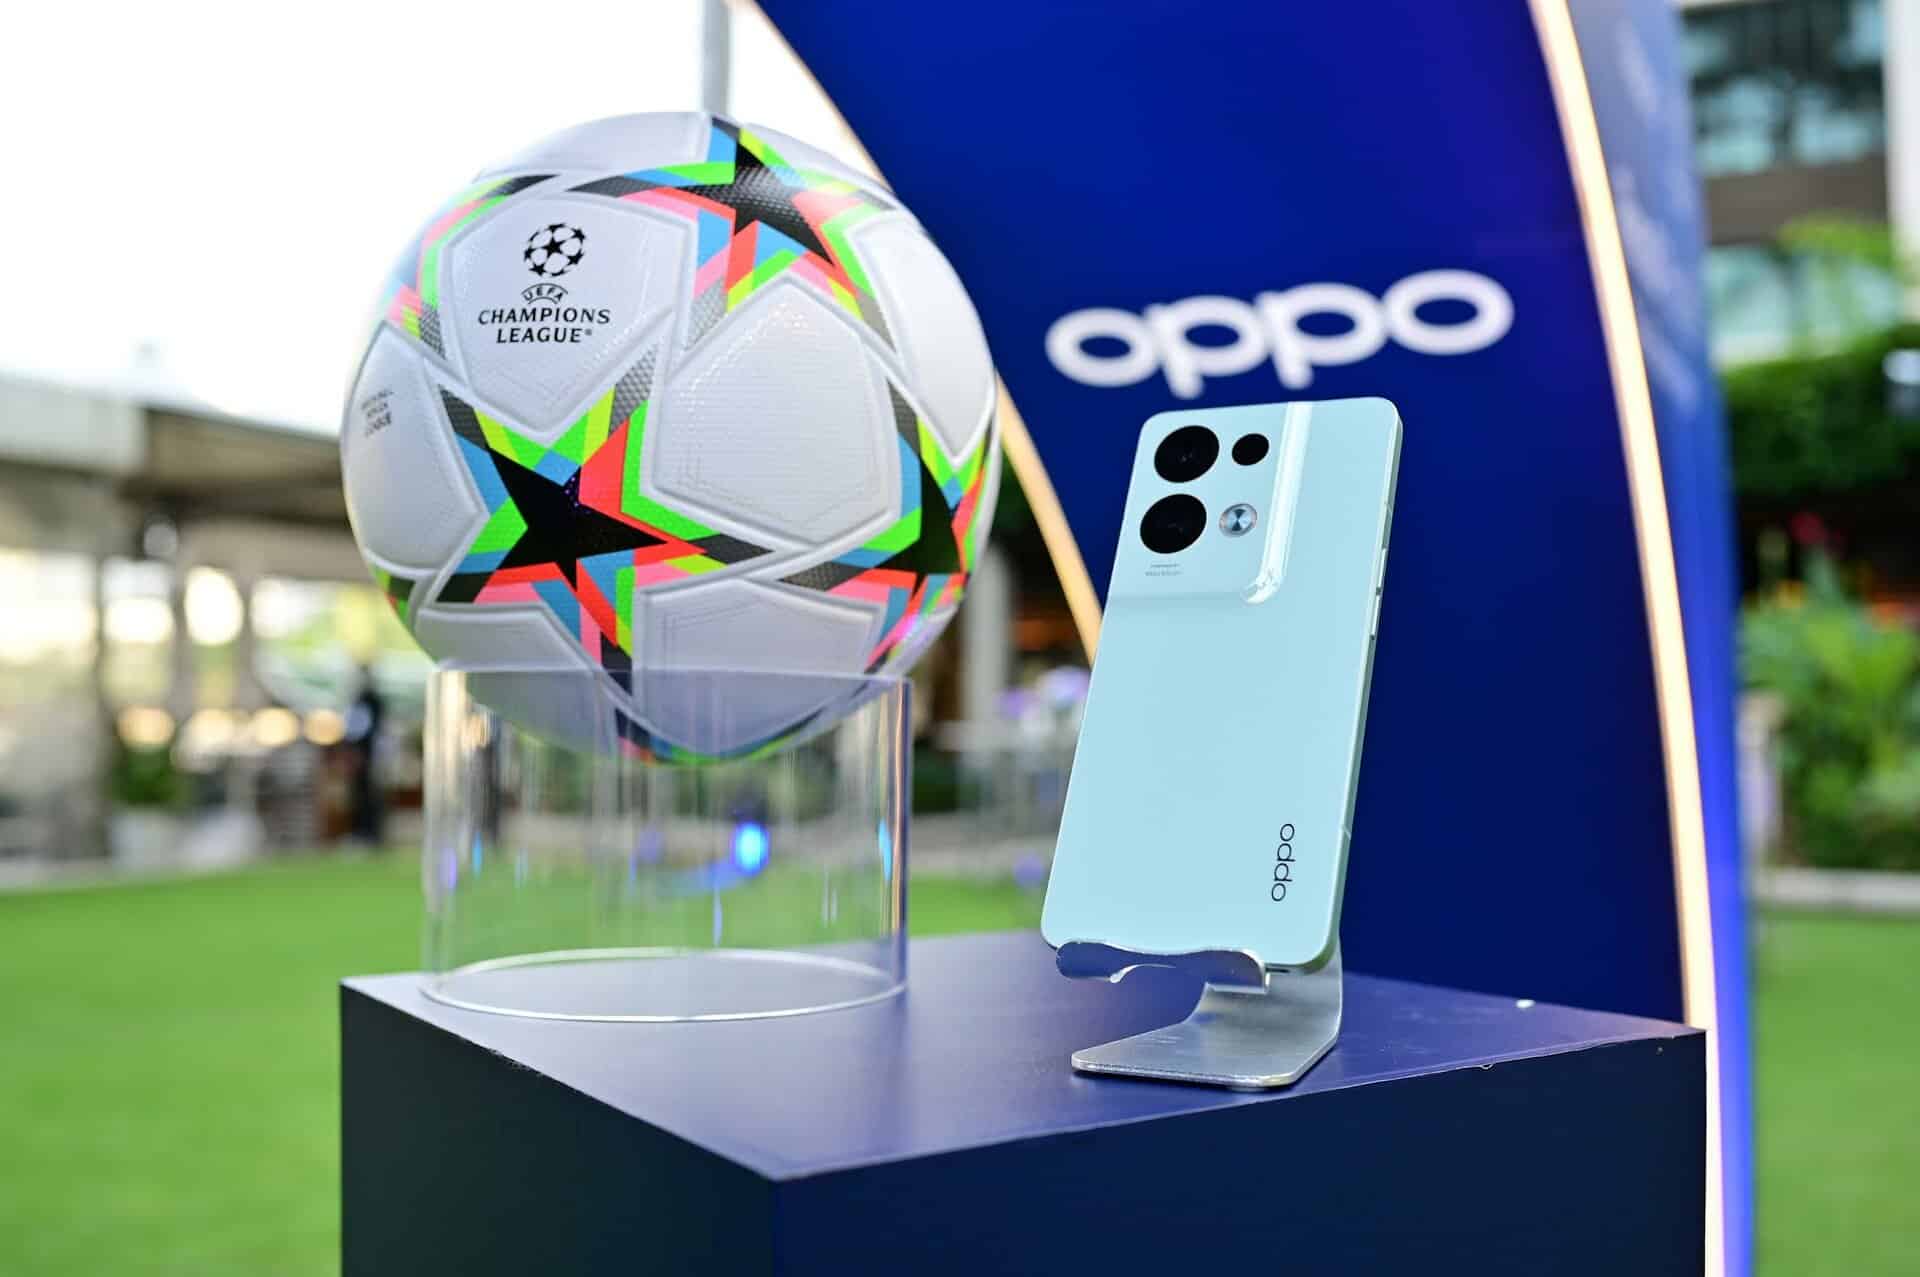 OPPO ha dato vita insieme a UEFA Champions League alla campagna globale “Inspirational Games